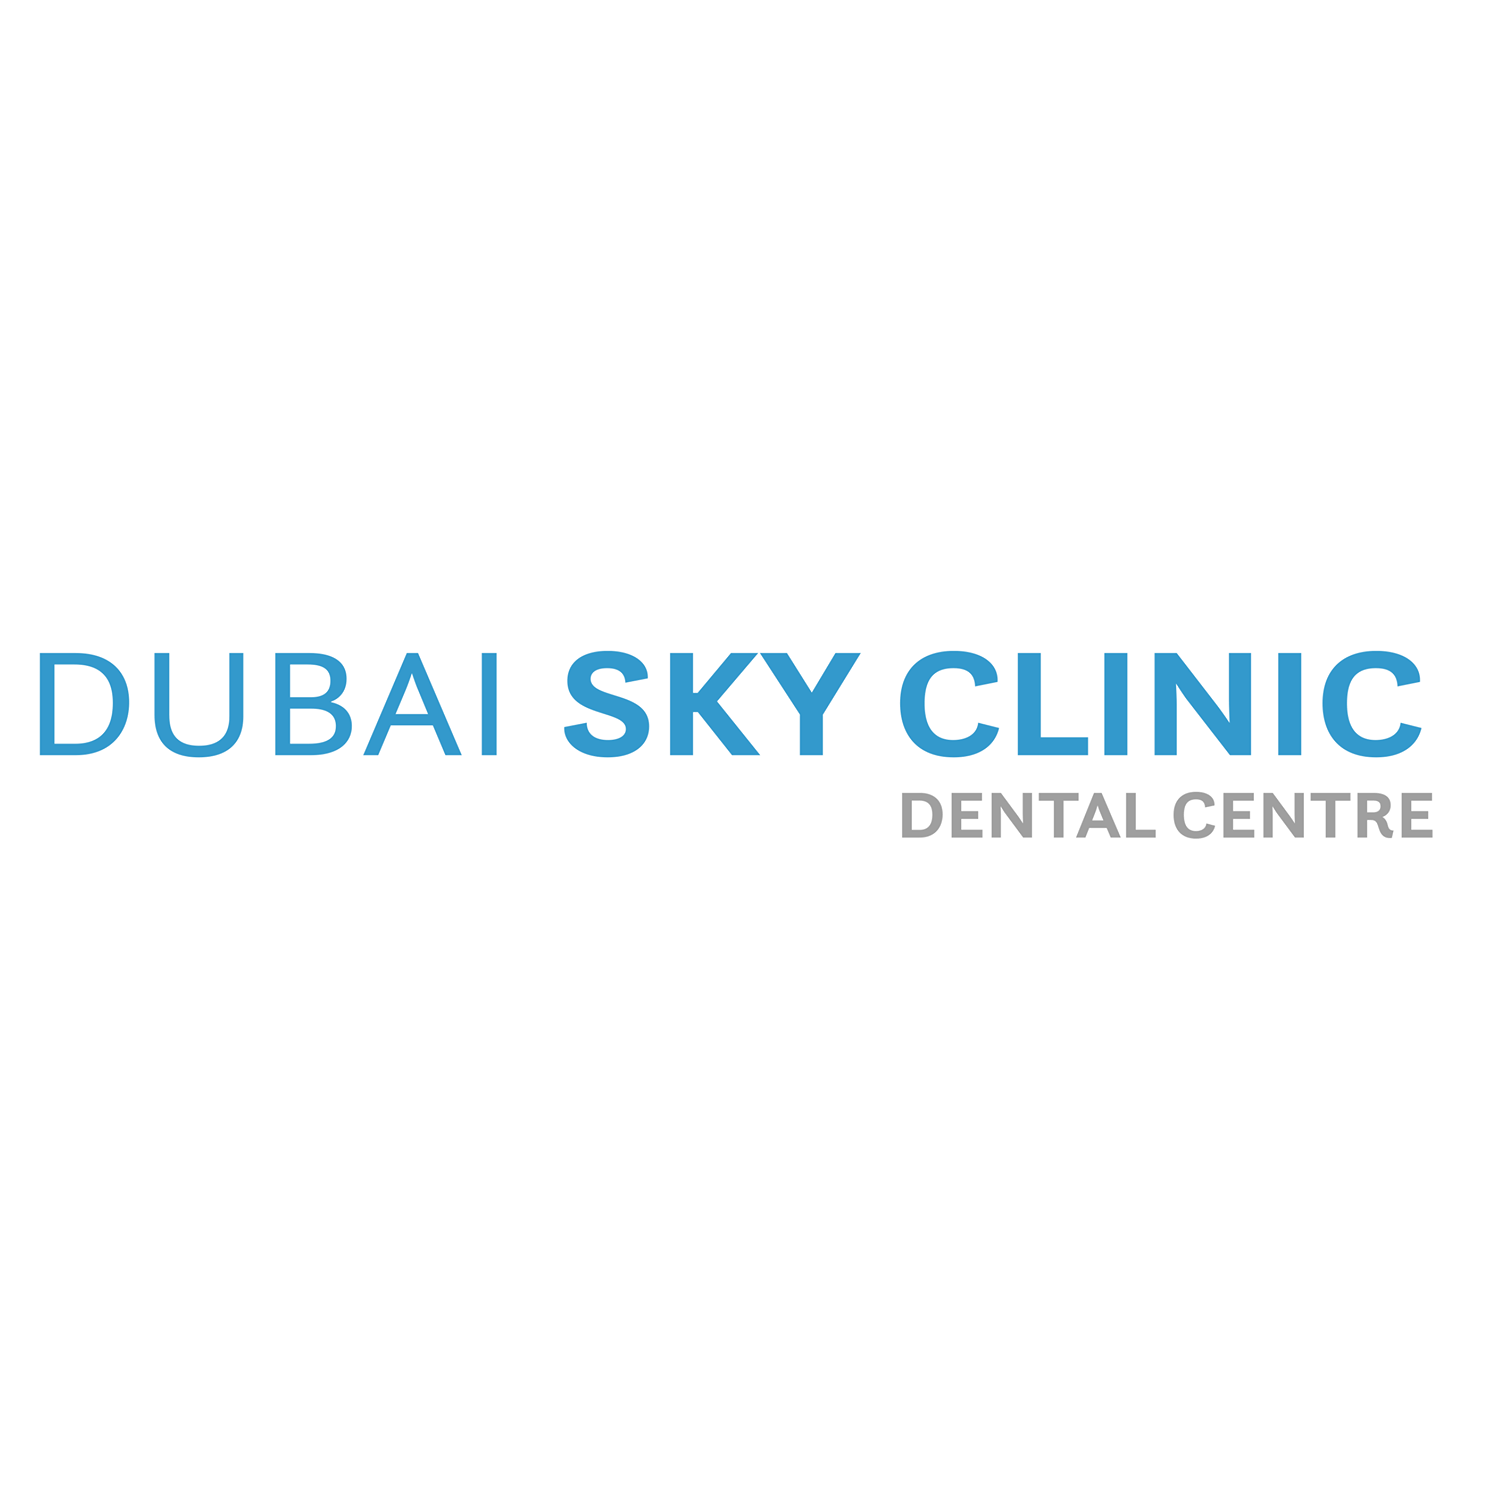 Dubai Sky Clinic Dental Center